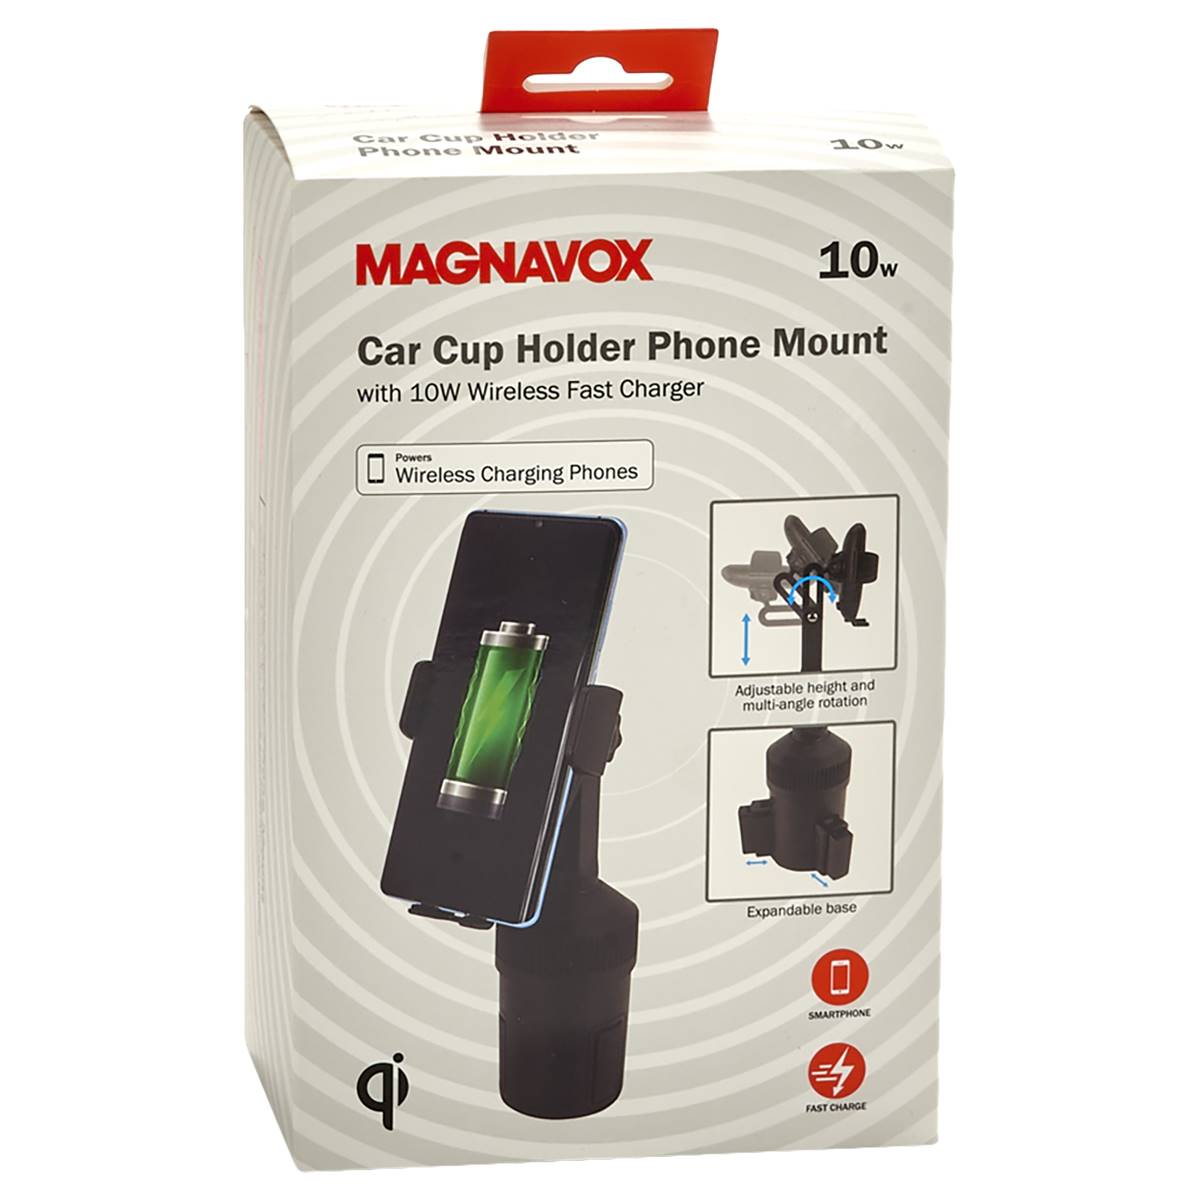 Magnavox Car Cup Holder Phone Mount